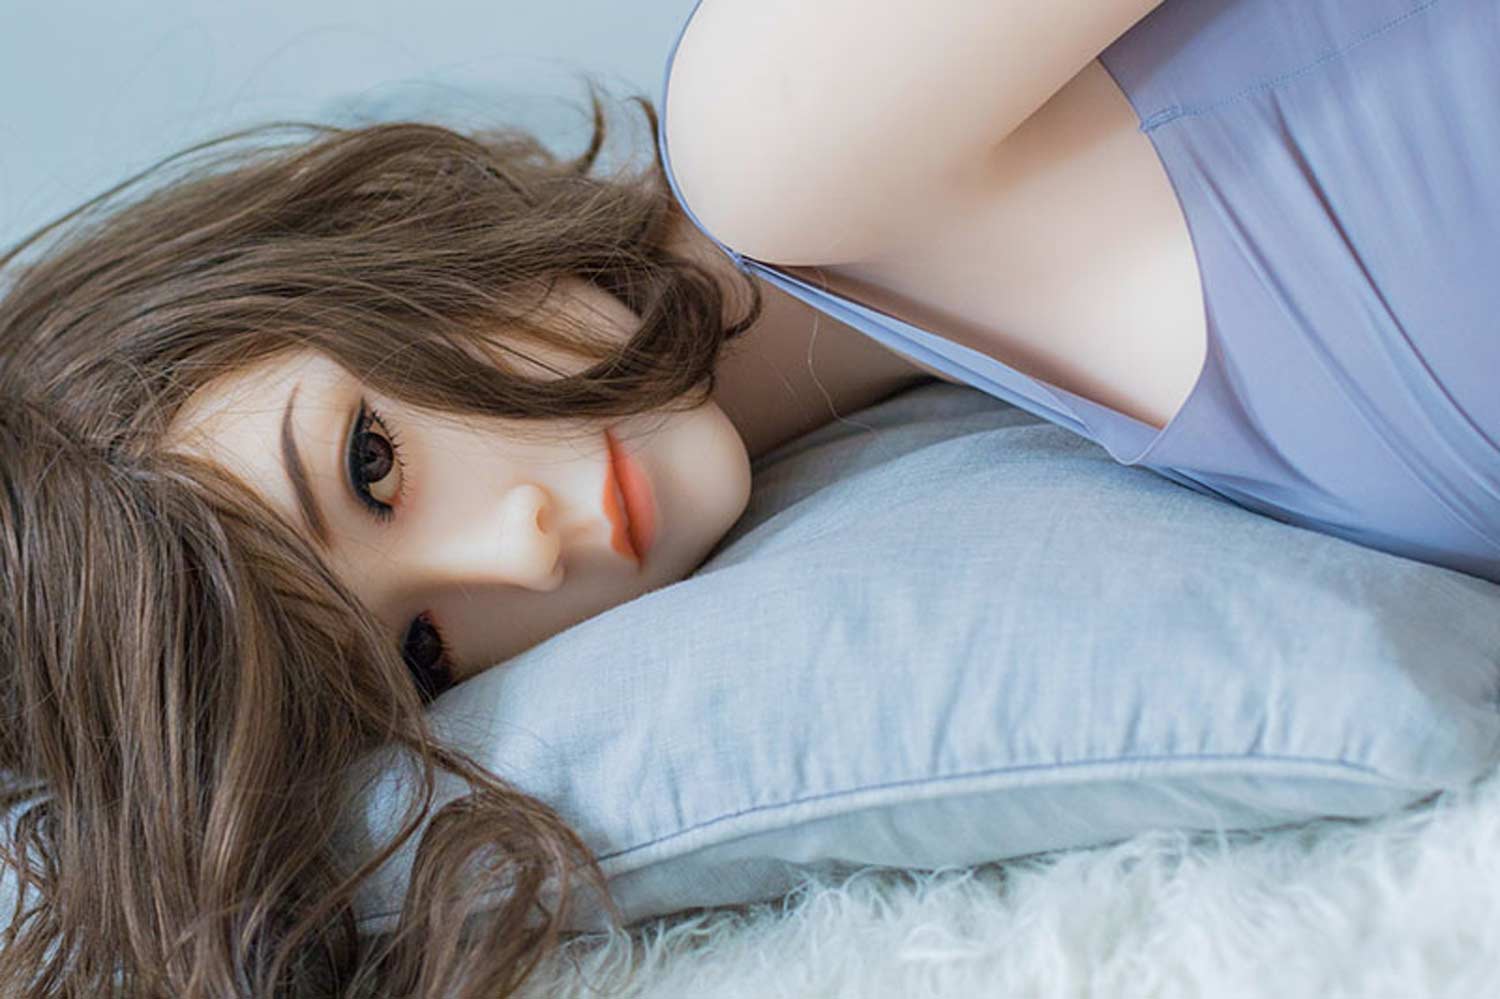 Sex doll lying on pillow